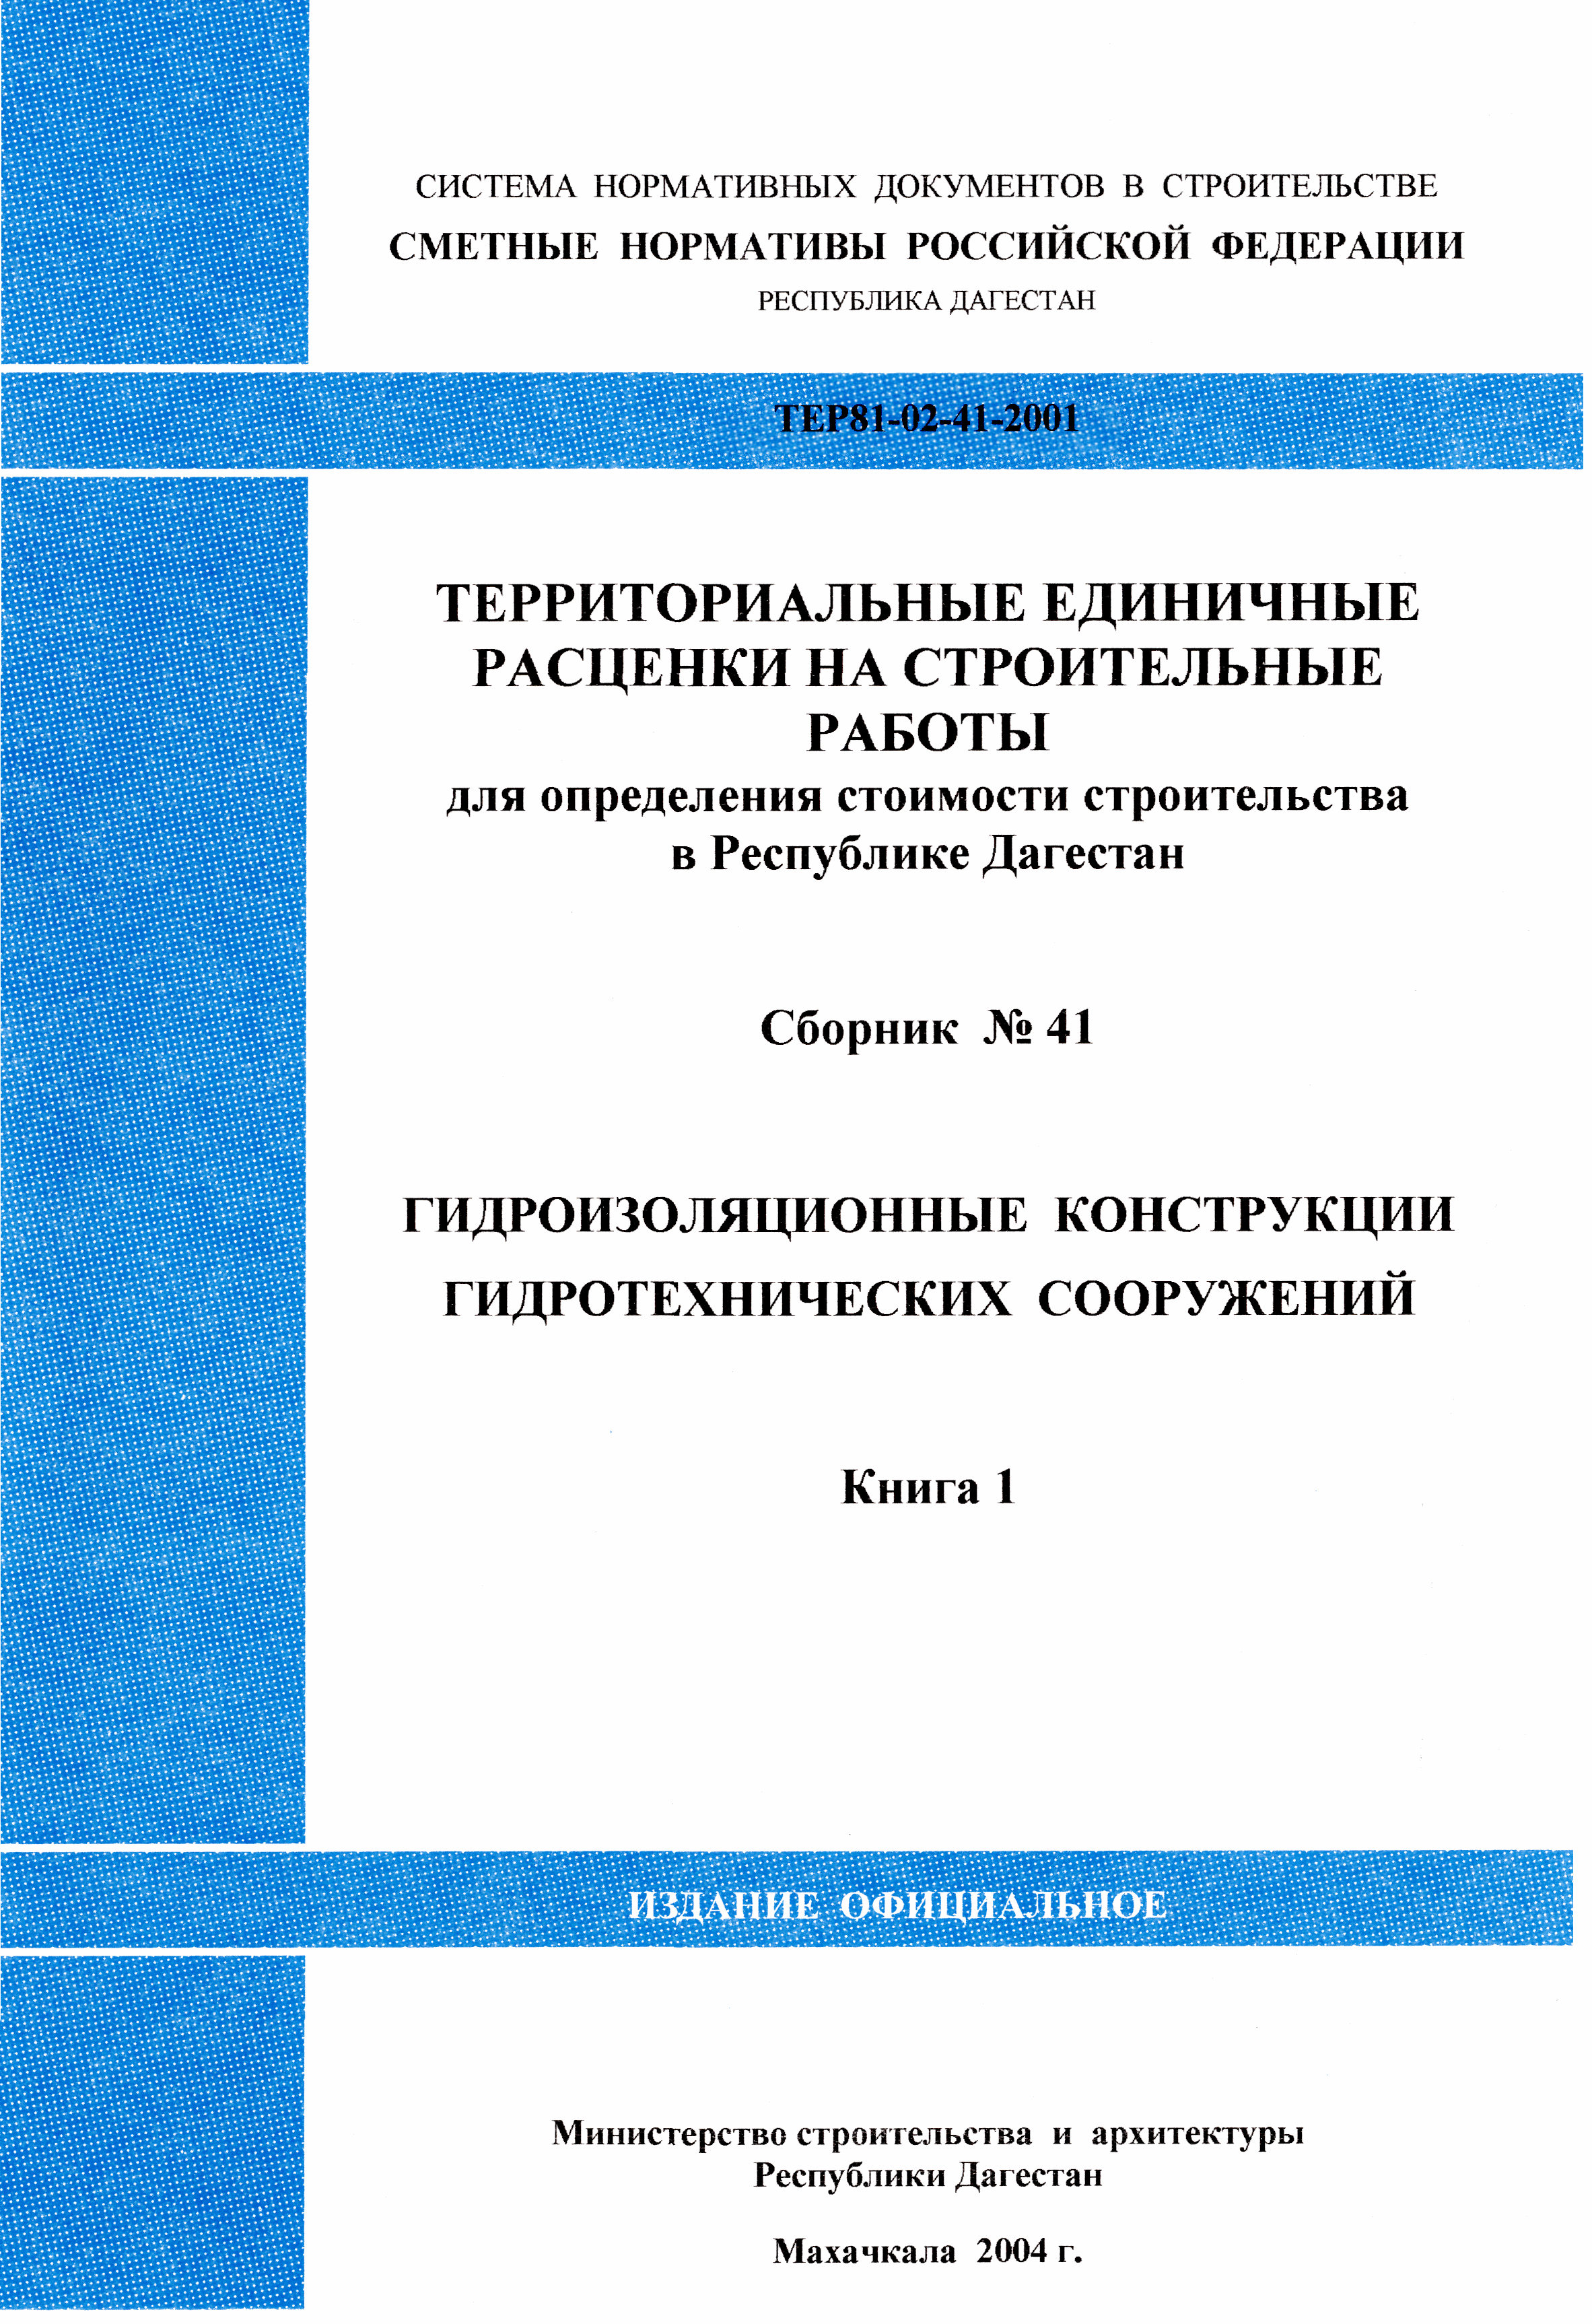 ТЕР Республика Дагестан 2001-41